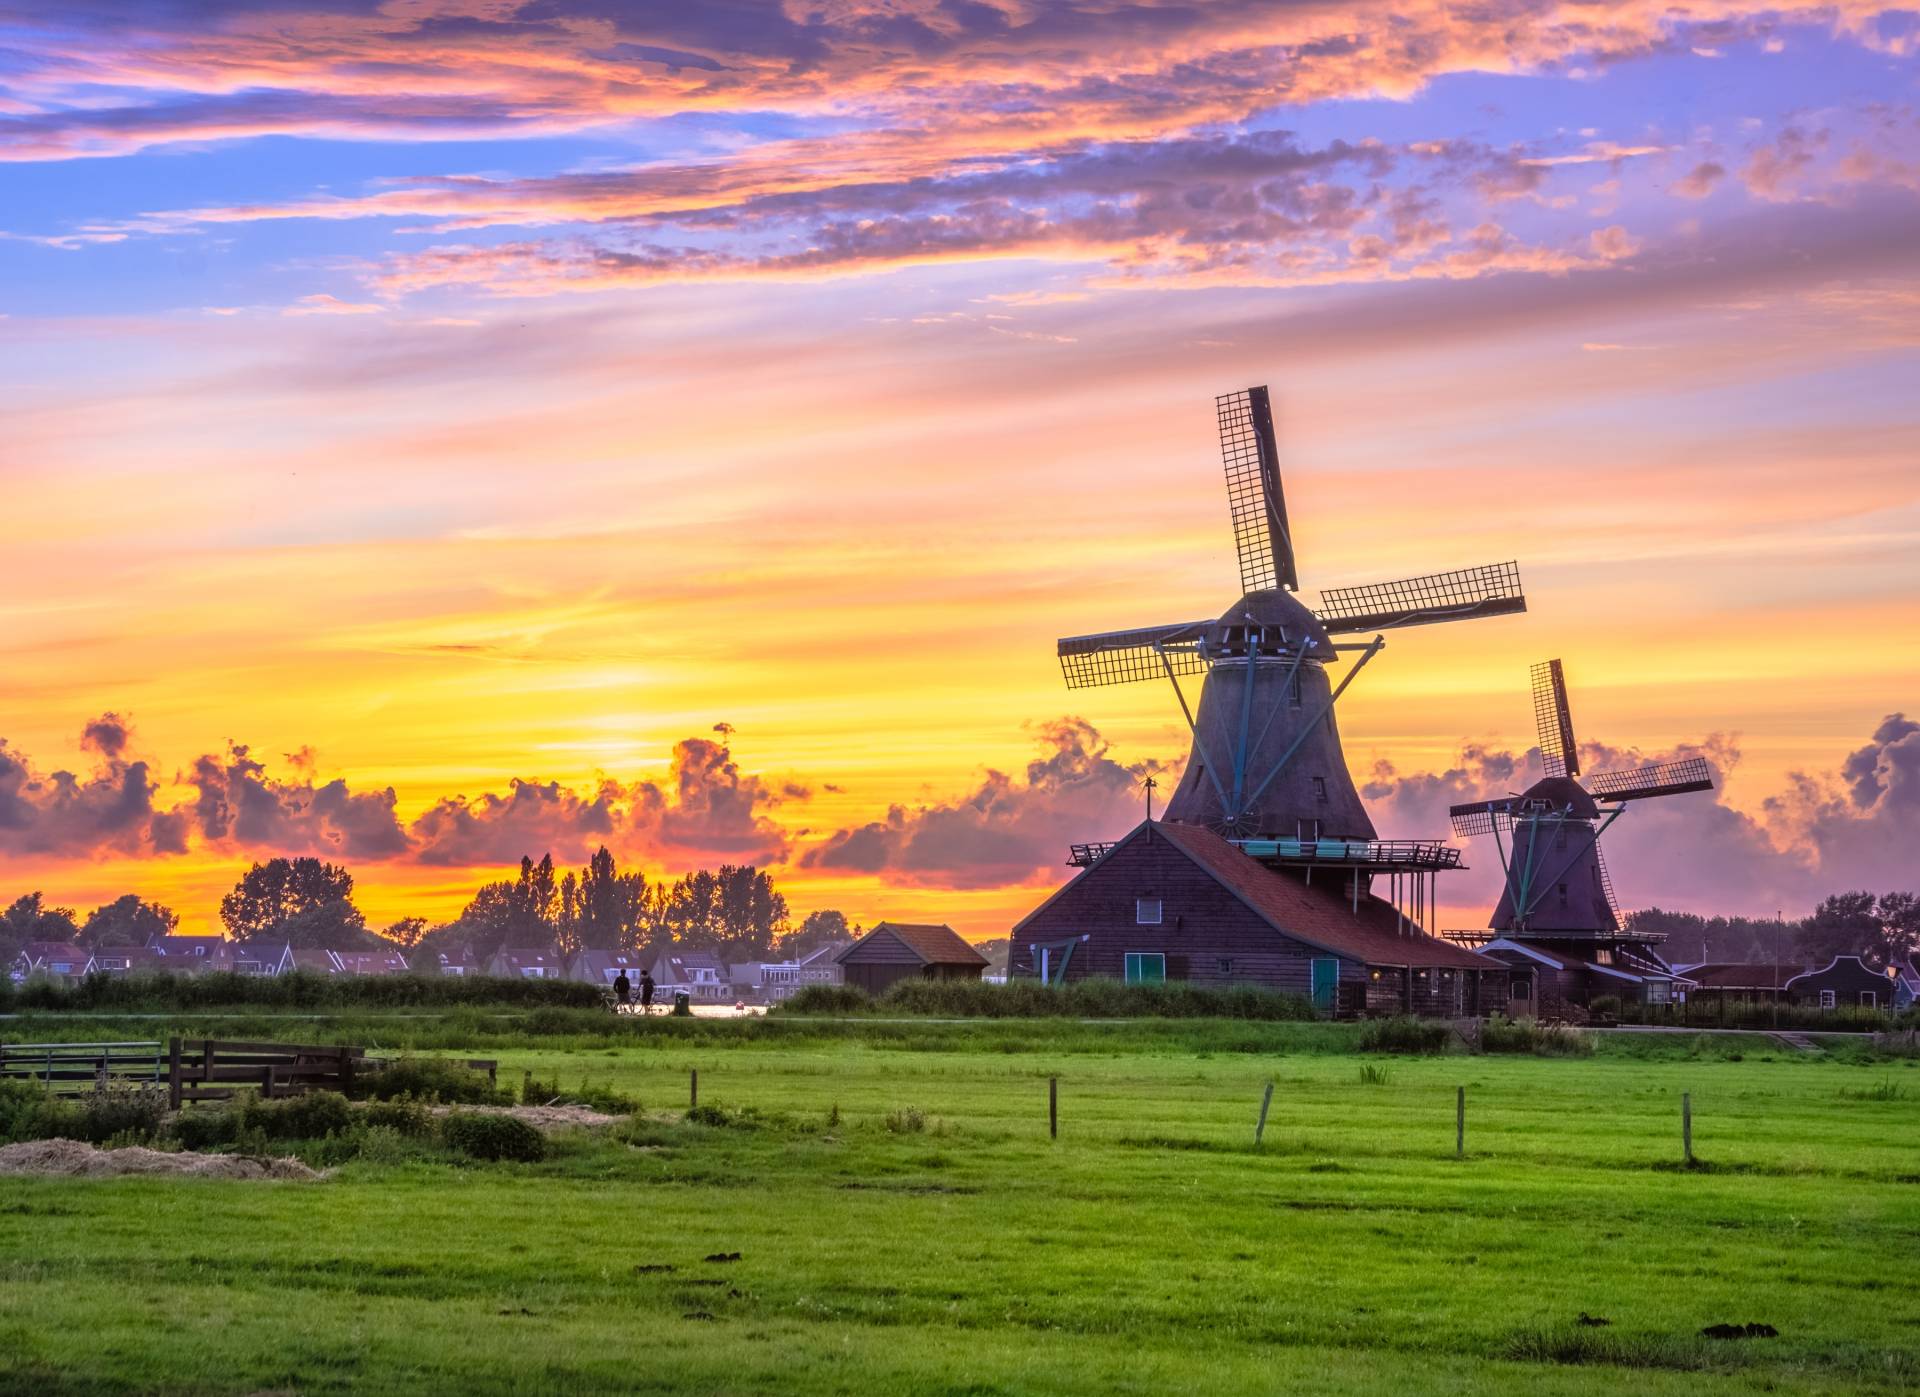 Papermoon Fototapete »Dutch Windmills« von Papermoon